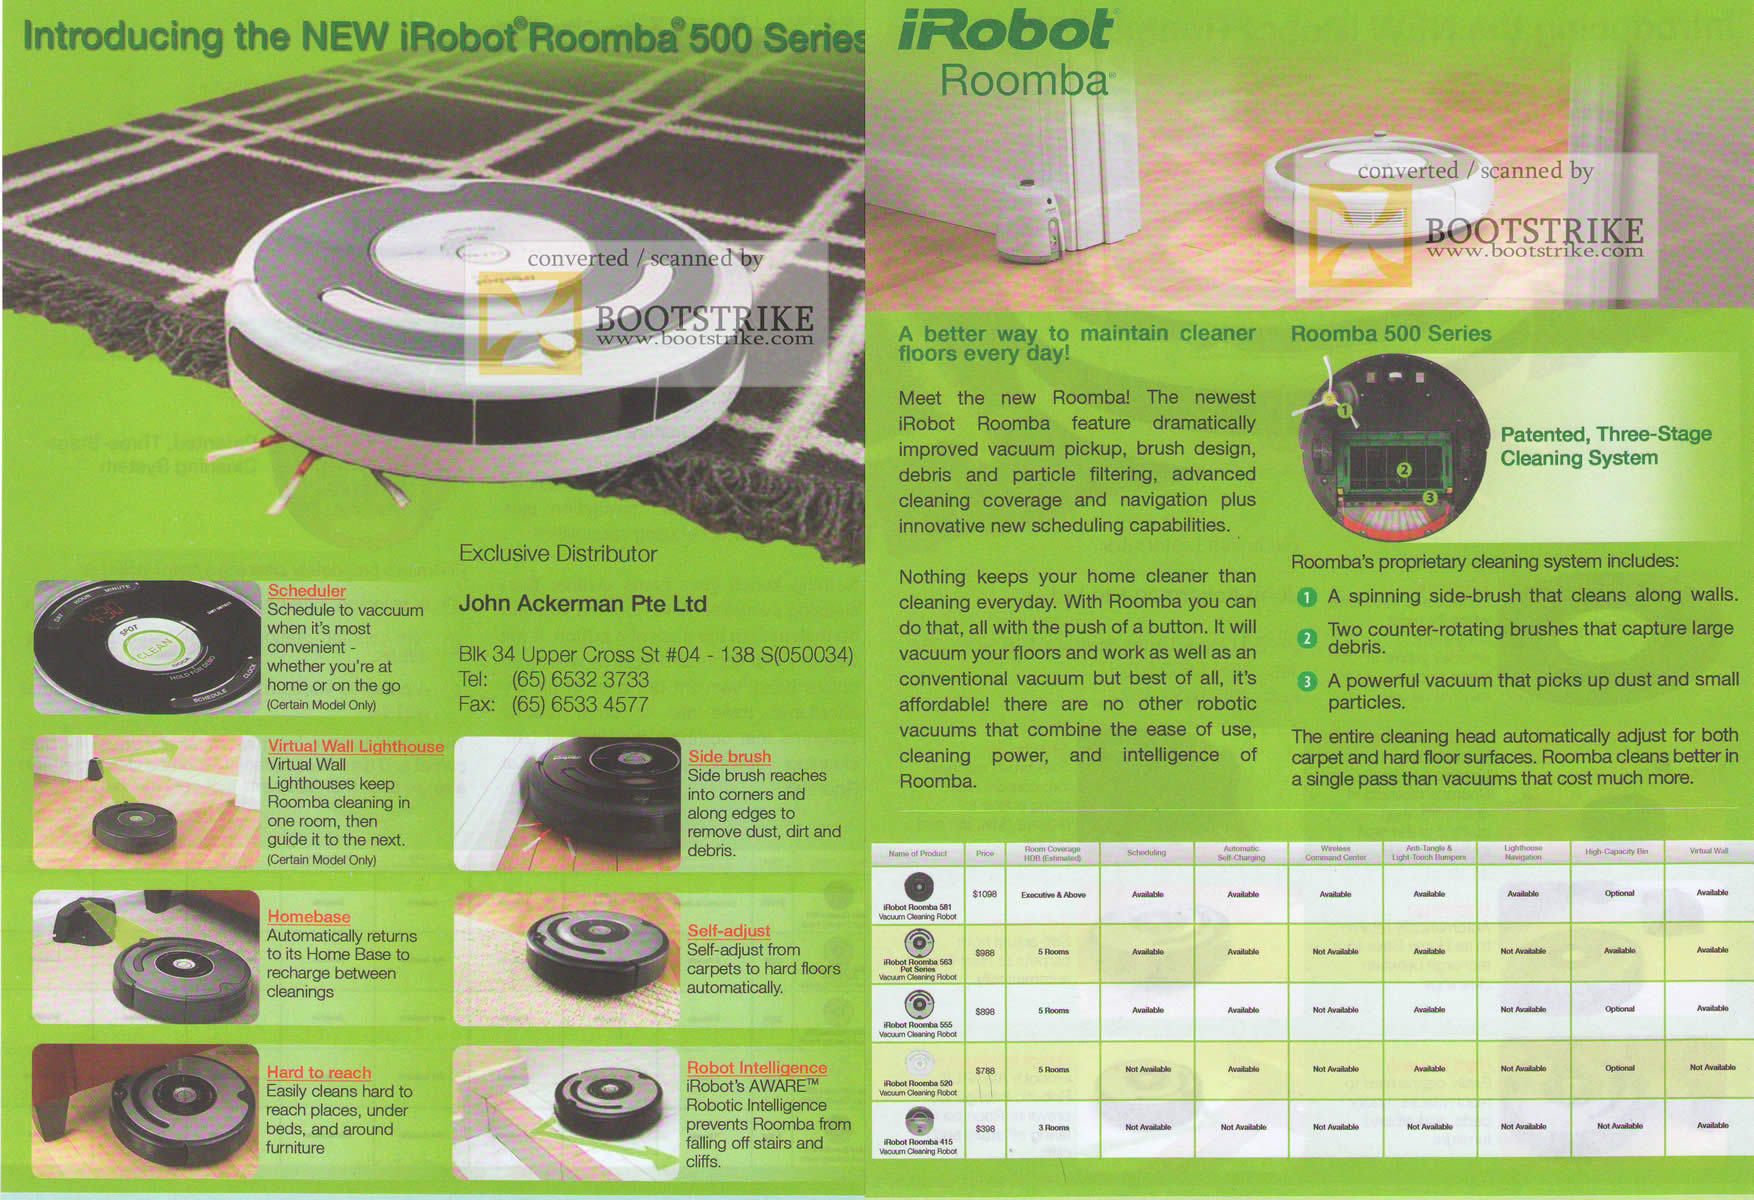 IT Show 2010 price list image brochure of IRobot Roomba 500 Series Robot